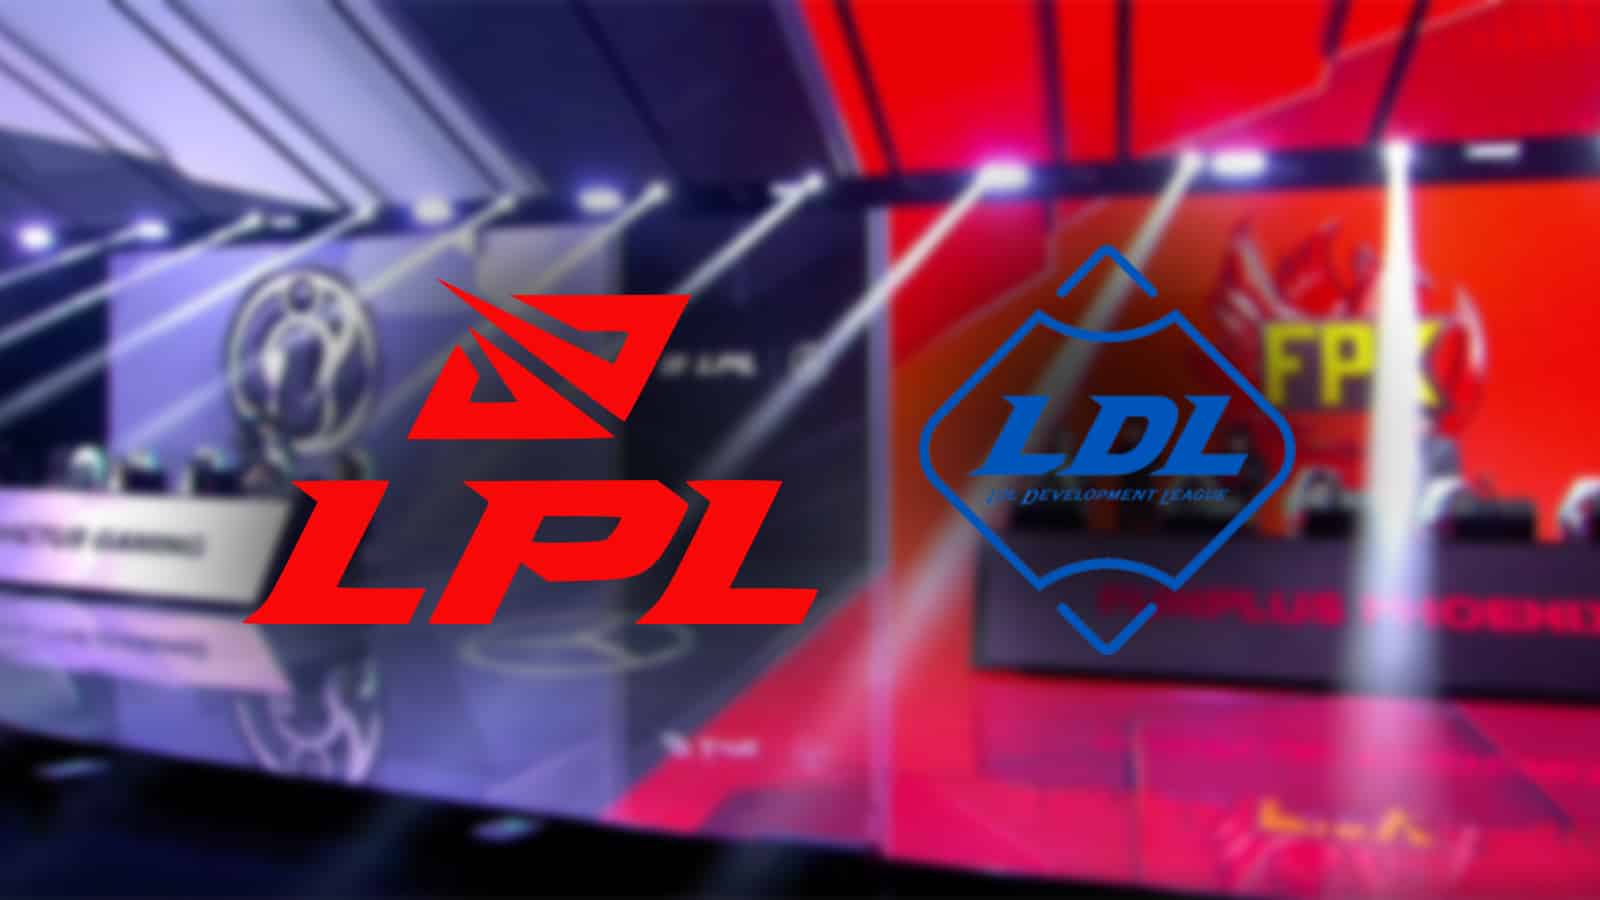 LPL and LDL matchfixing bans 2021